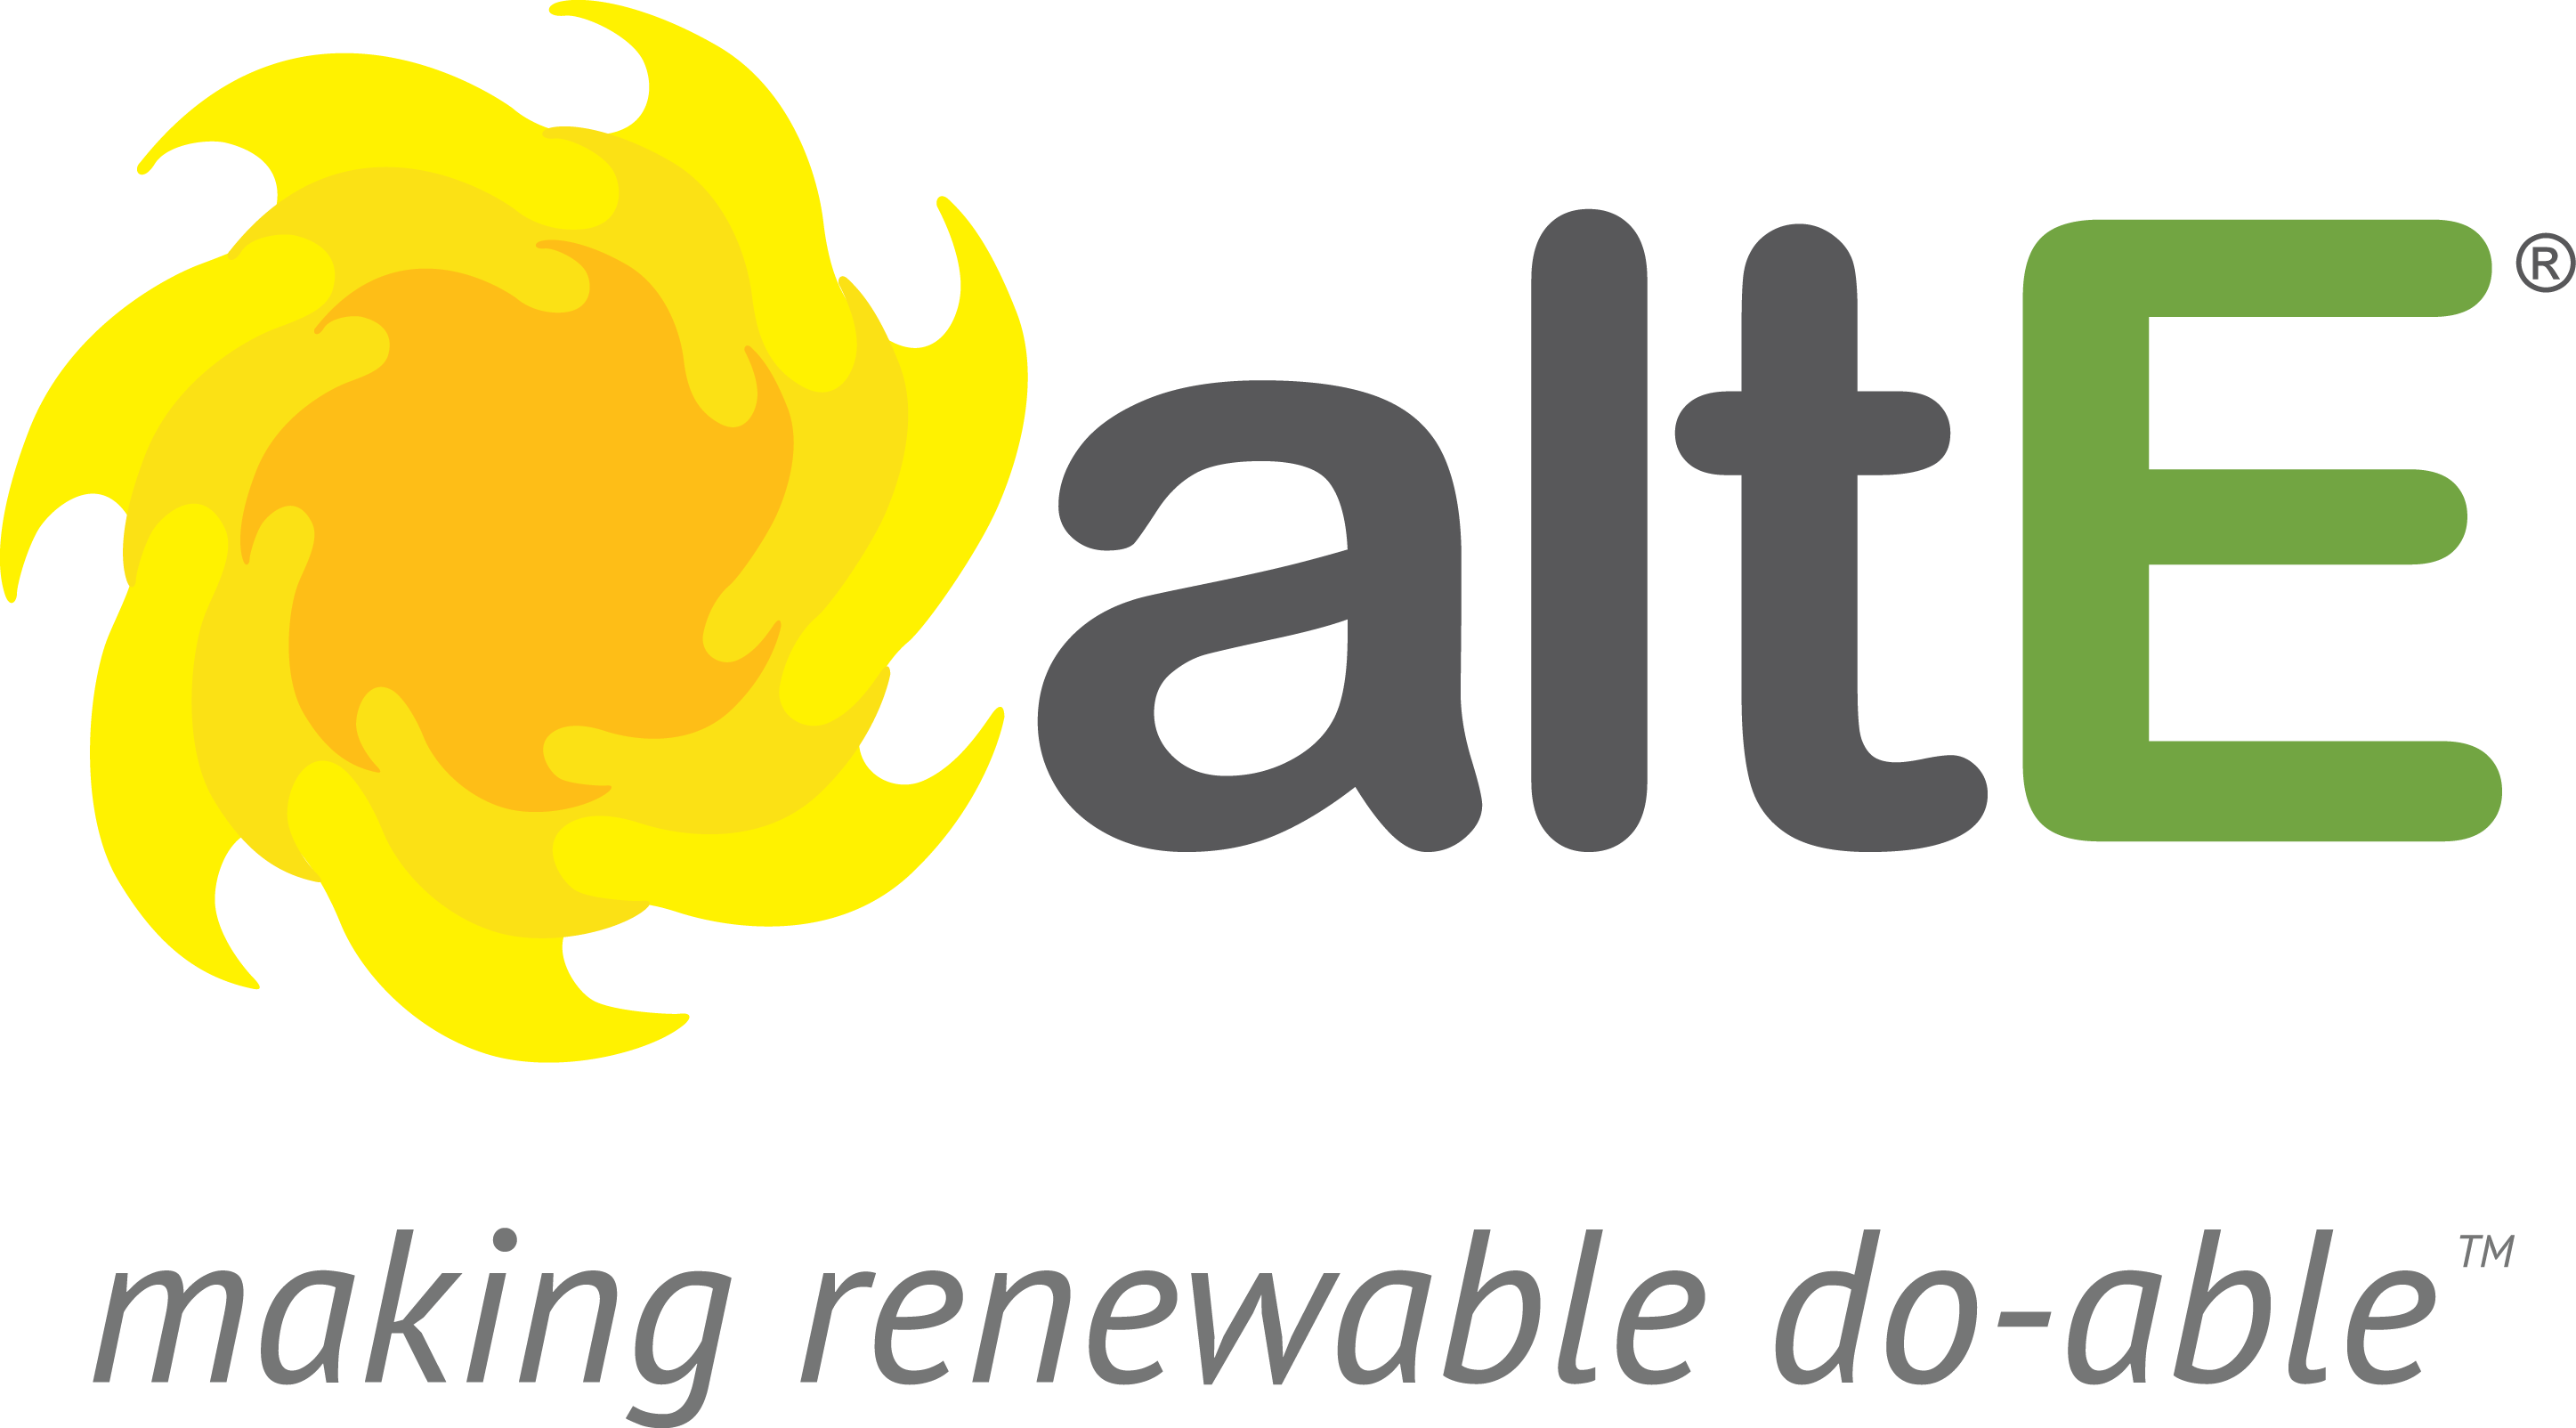 Логотип Solar Power. Solar Power Энергетик логотип. Solar Energy logo.